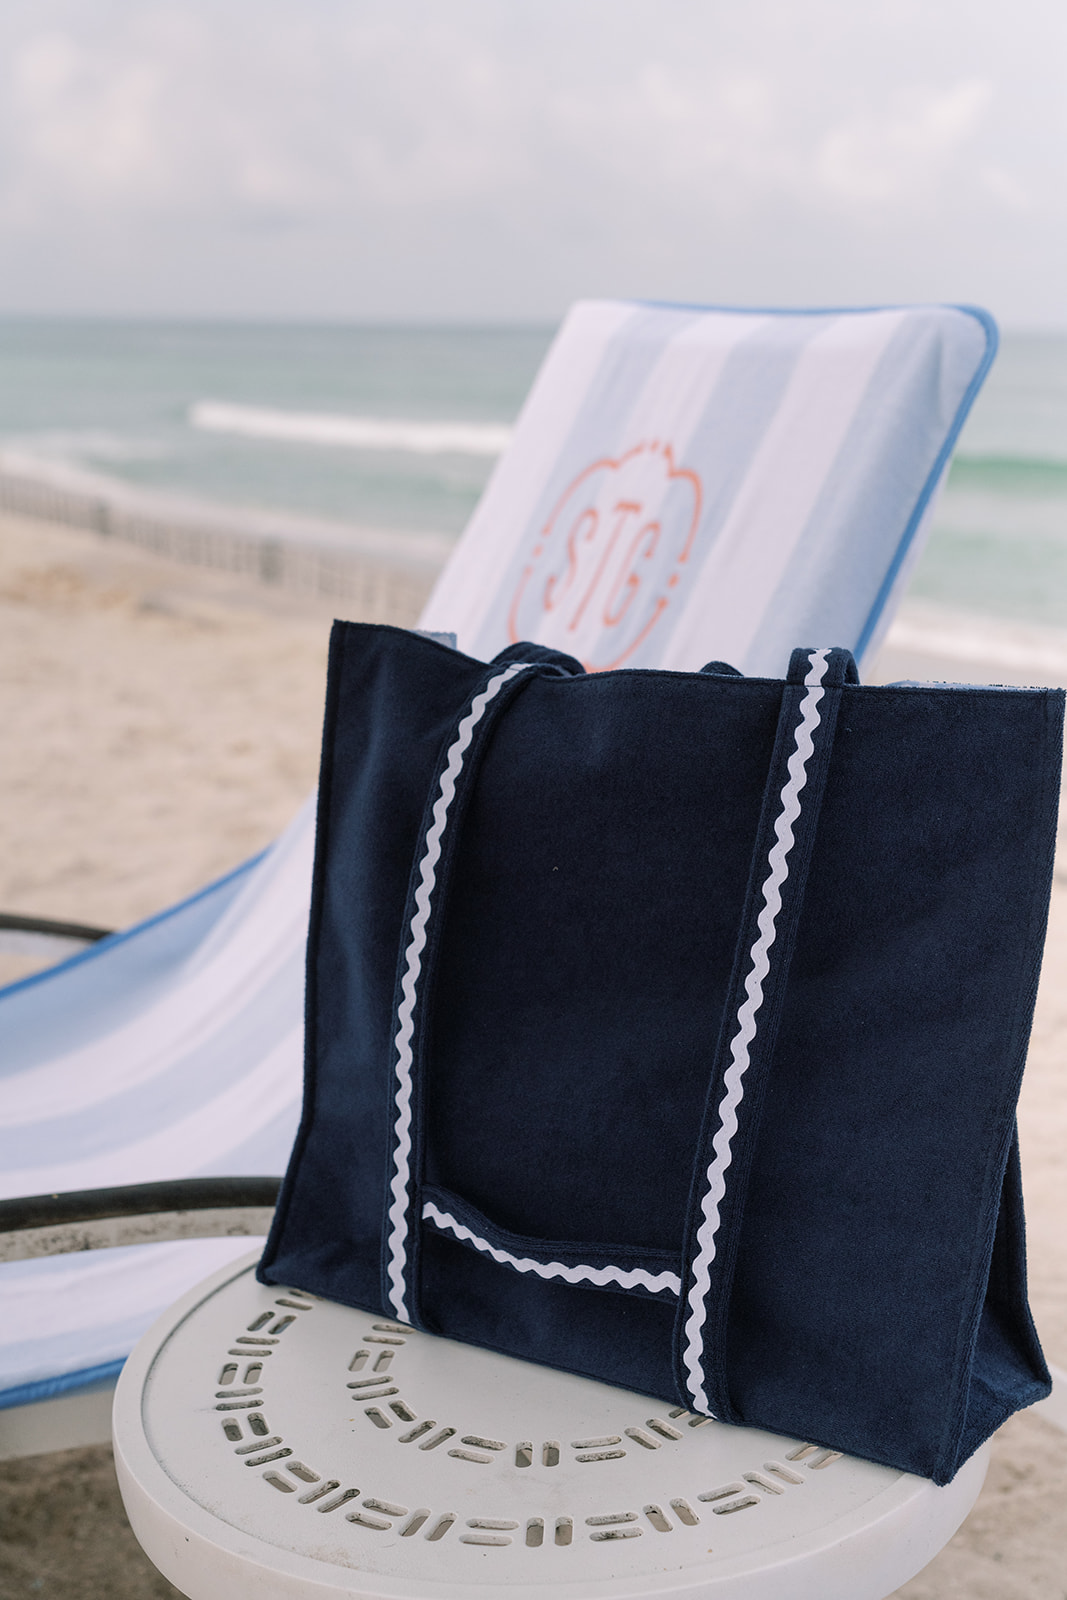 ric rac bag, bag to hold hat, Weezie beach bag, Weezie towel products, Weezie beach products, Weezie beach towels